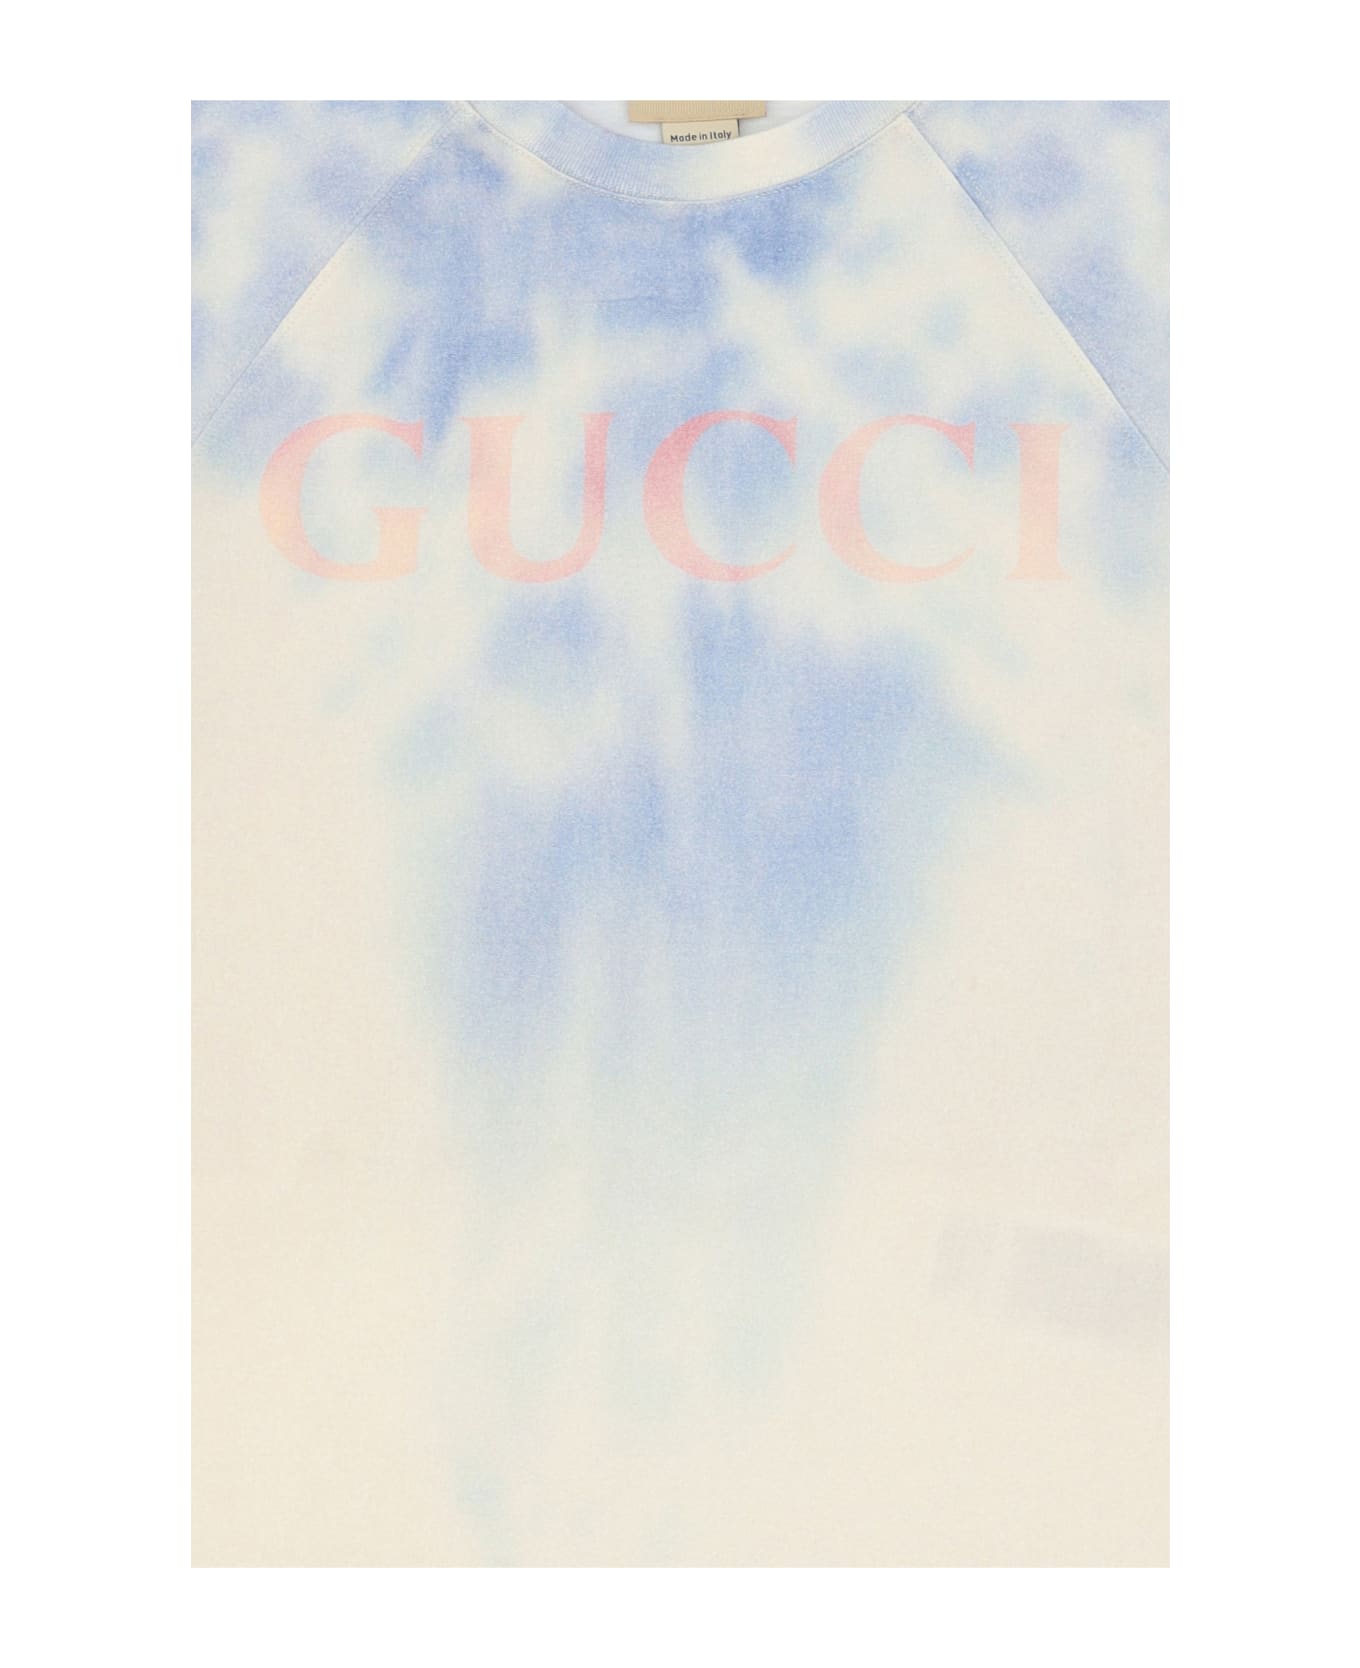 Gucci T-shirt For Boy - WHITE